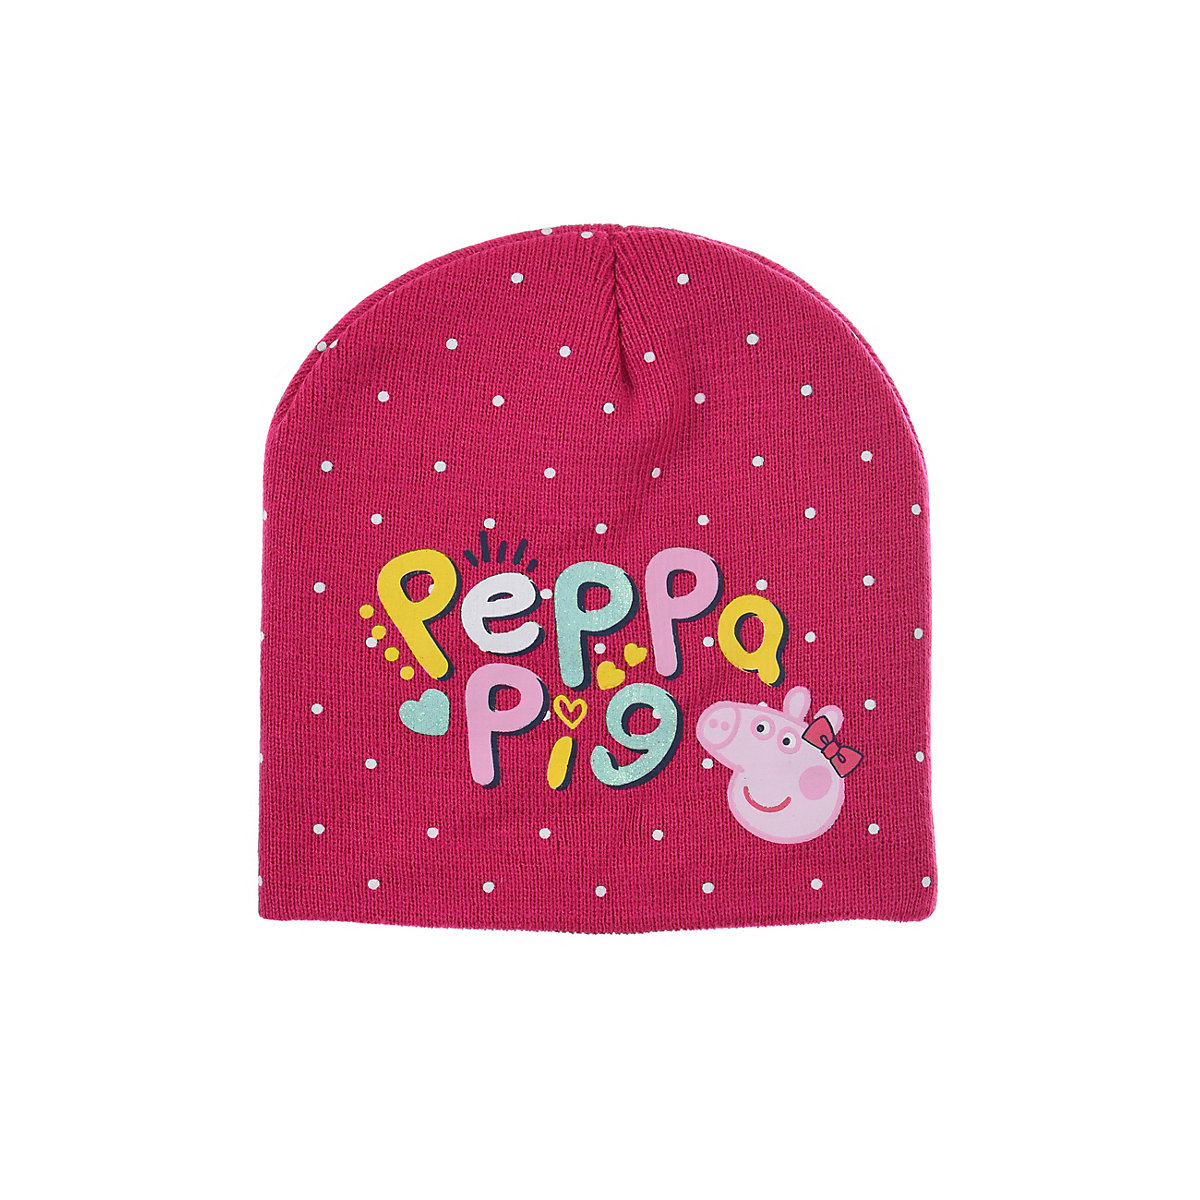 Peppa Pig Peppa Wutz Pig Kinder Mütze pink